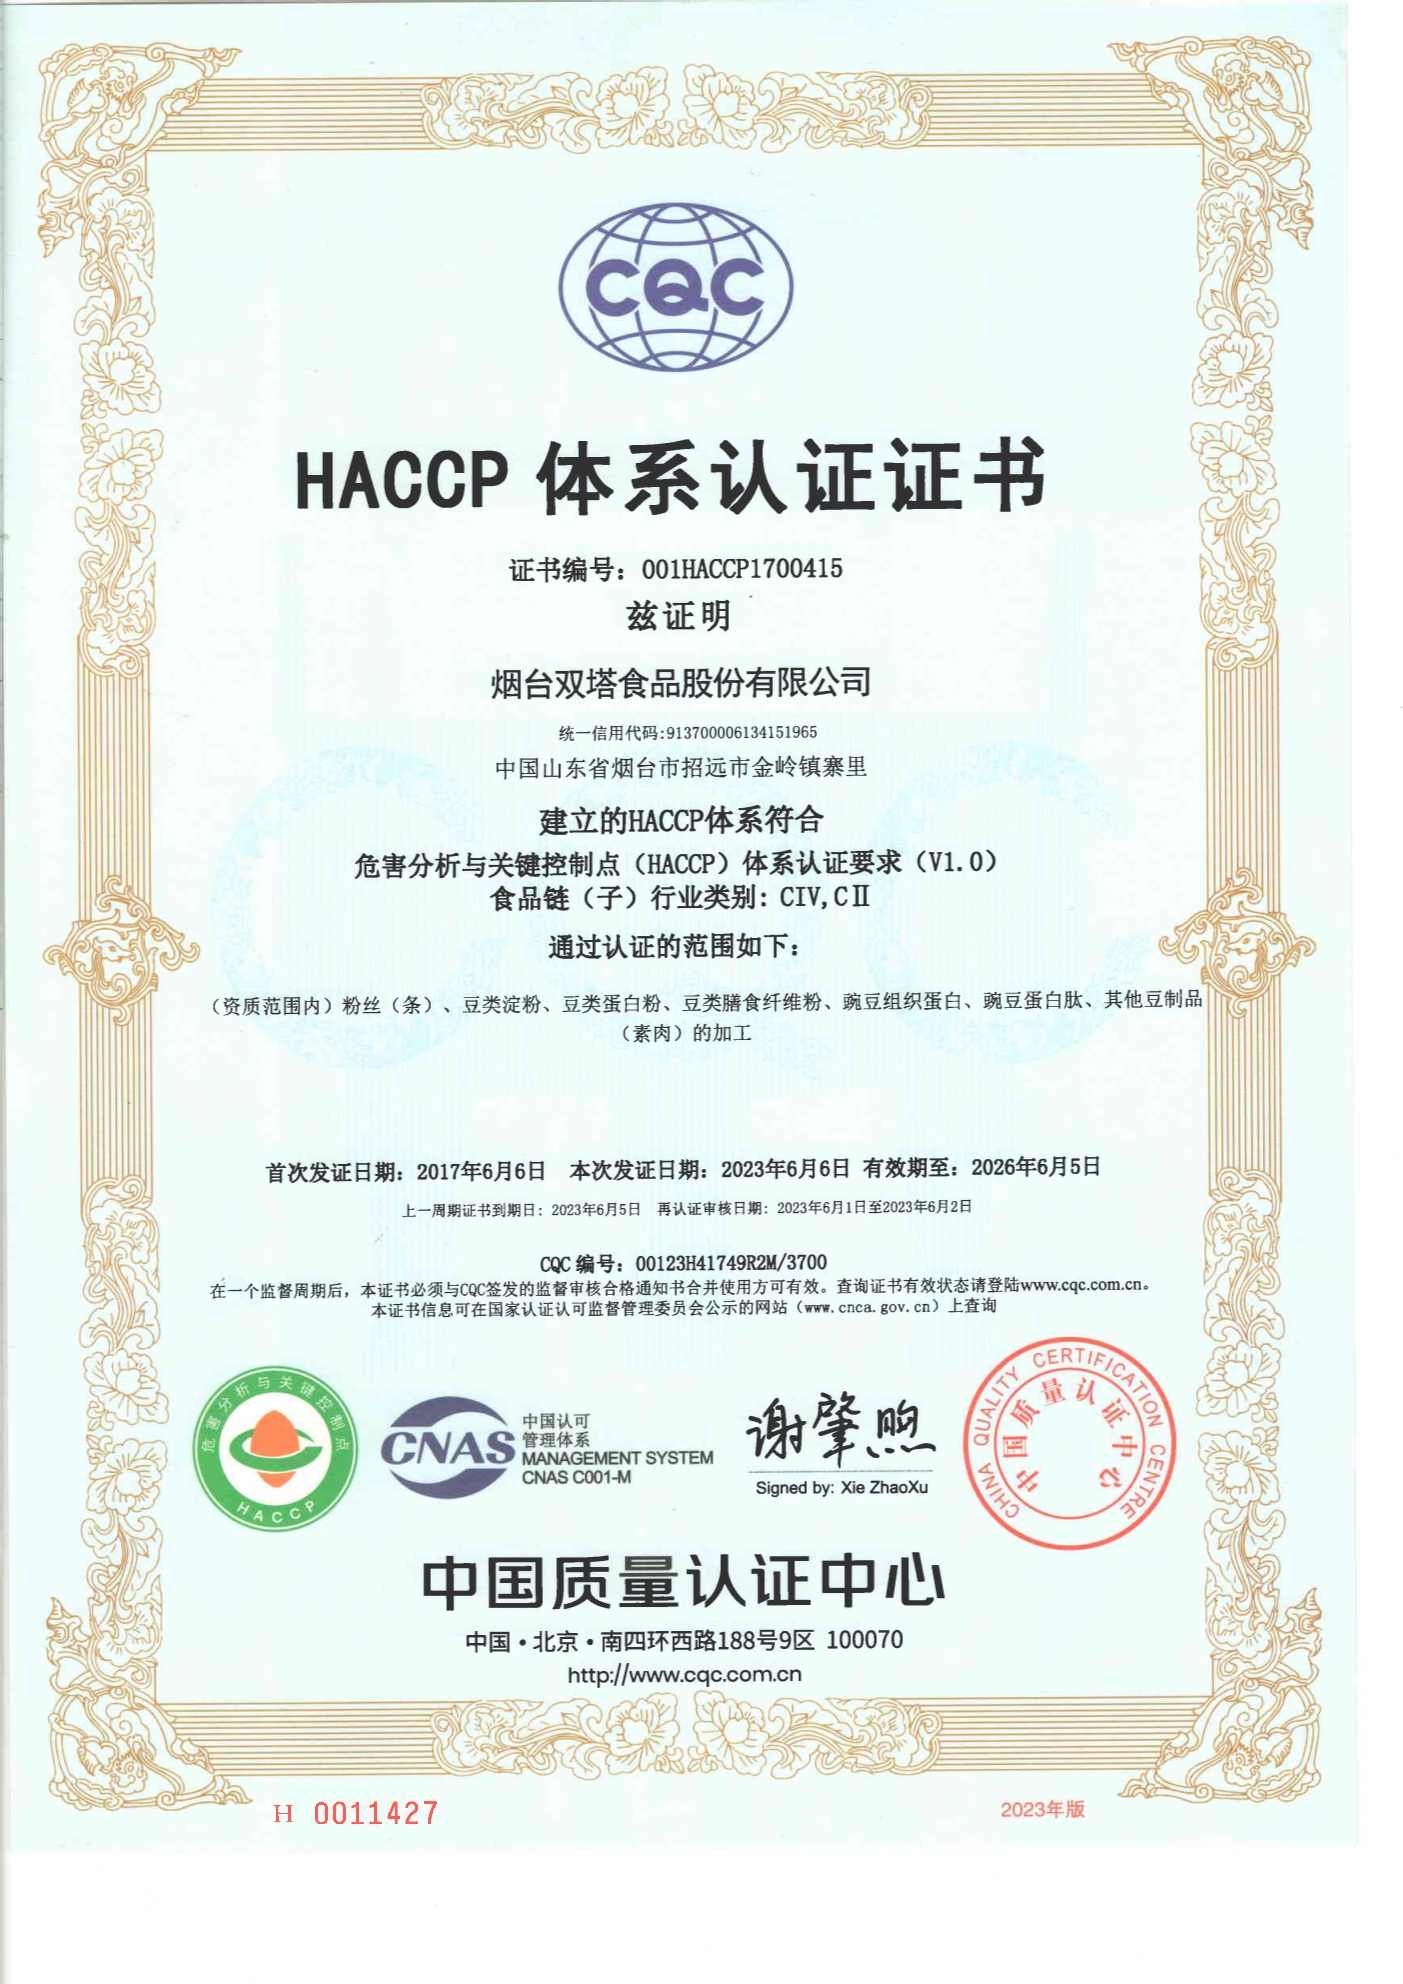 HACPP认证